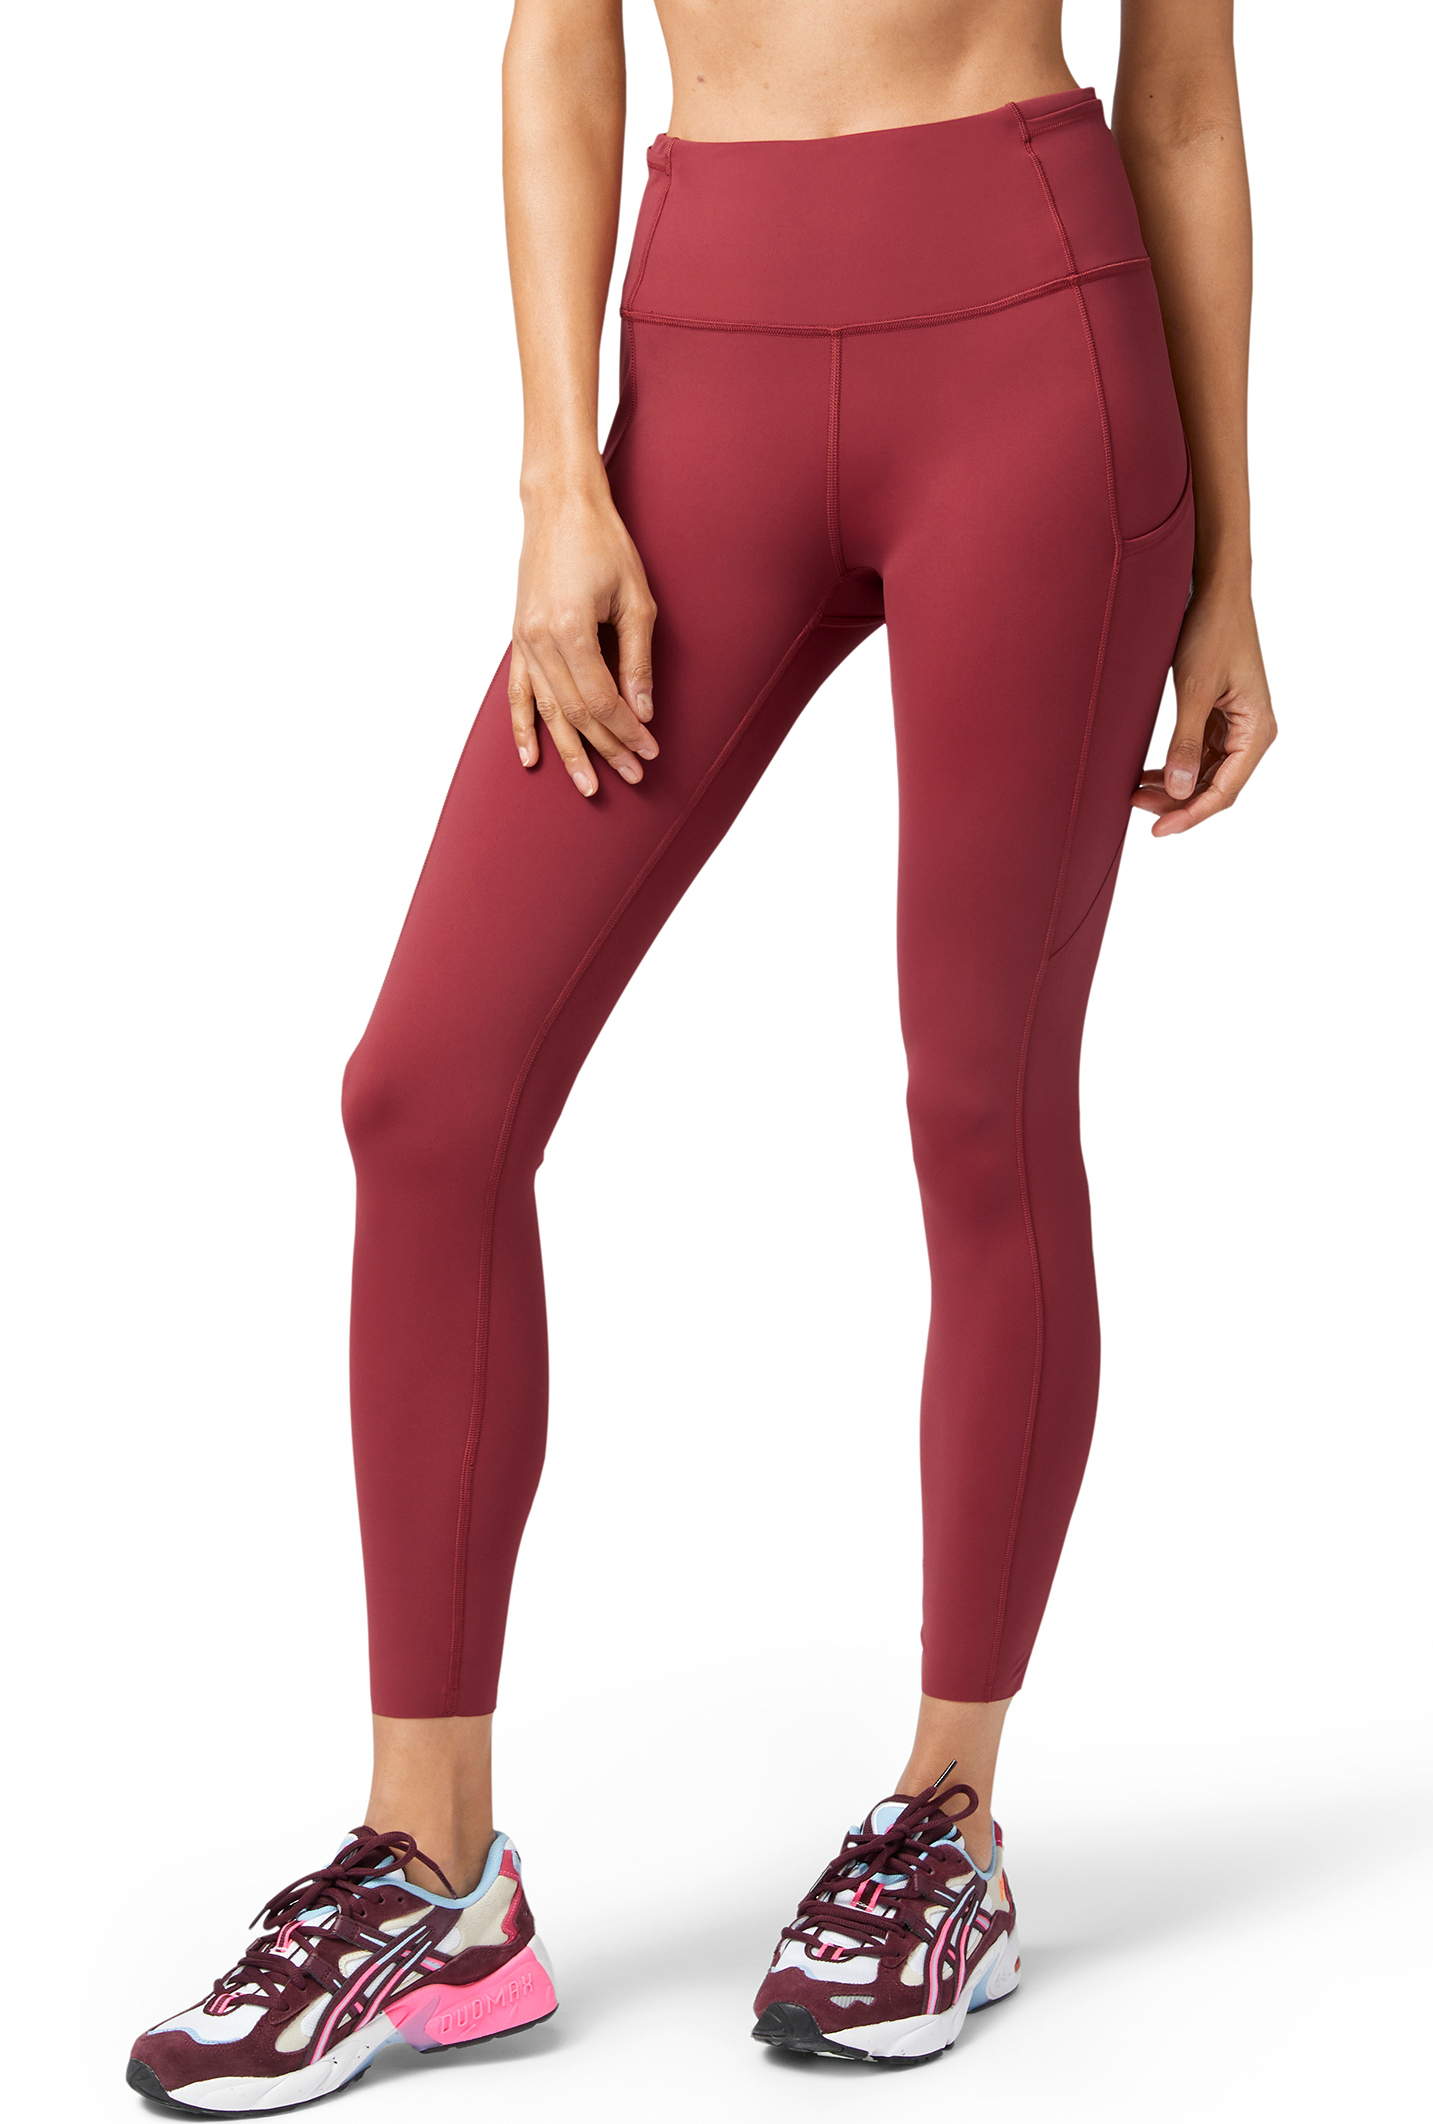 Shop Generic Push Up Buttlift Leggings Women Mesh Sport Gym Tight Female  High Waist Running Yoga Pants Sportwear(#Red) Online